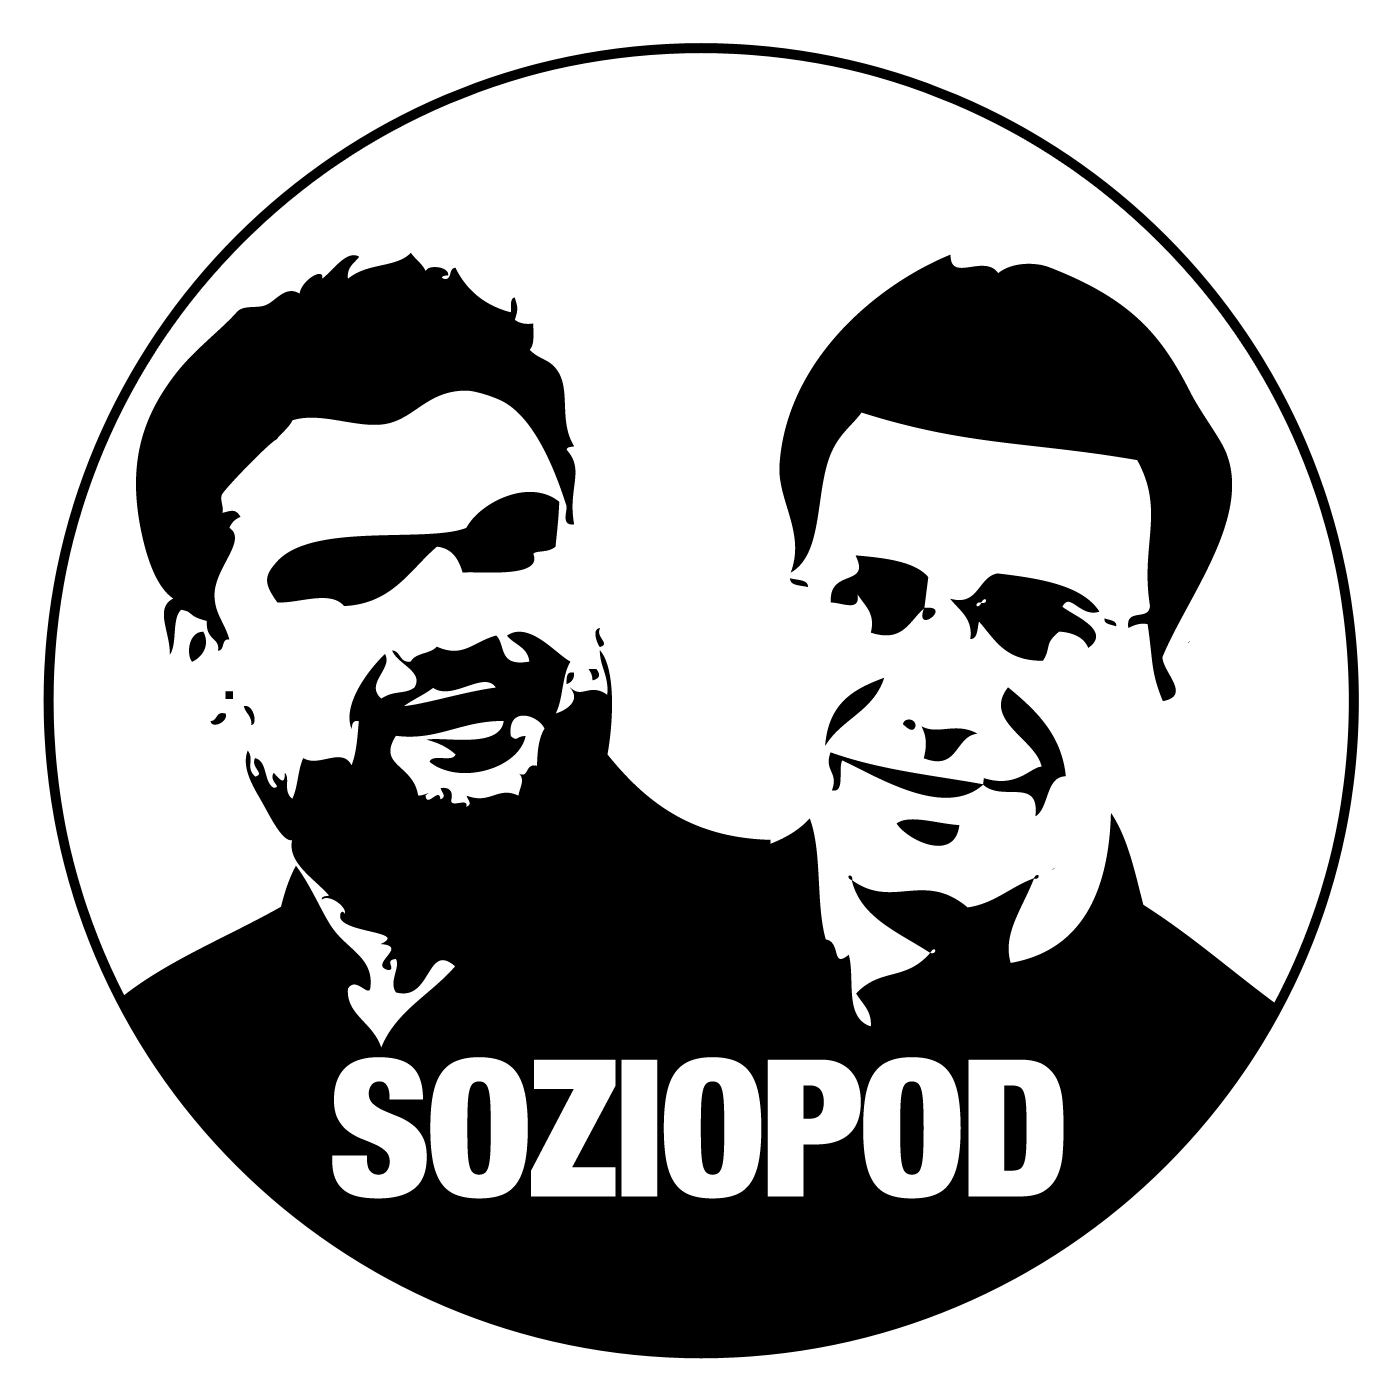 Soziopod (Soziologie, Philosophie, soziale Arbeit, Wissenschaft, Pädagogik) Podcast artwork